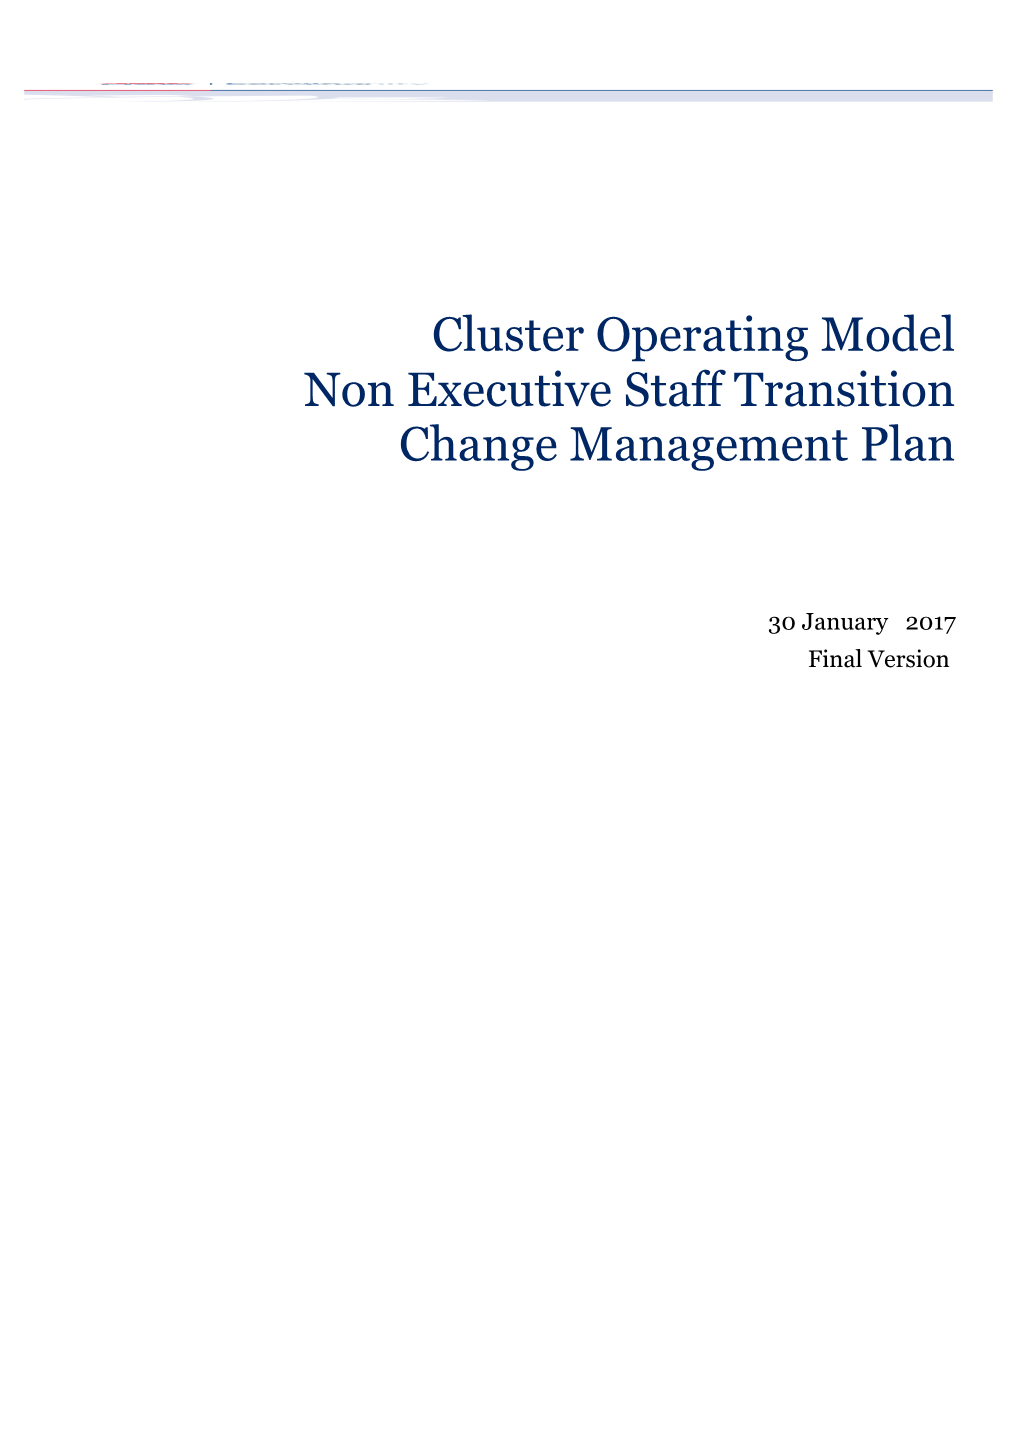 Non Executive Staff Transition Change Management Plan